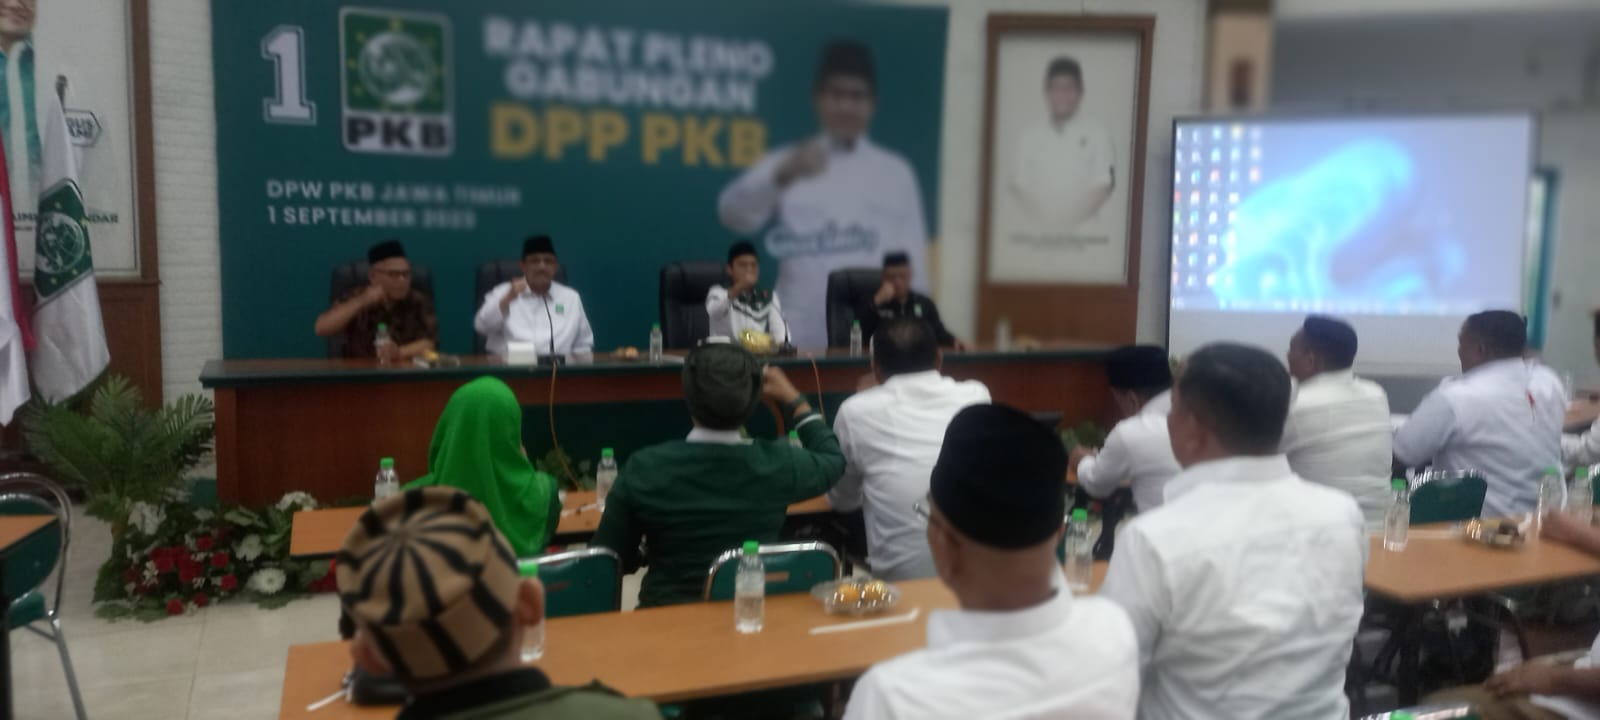 Pleno PKB di Surabaya Persiapan Deklarasi Anies-Muhaimin?